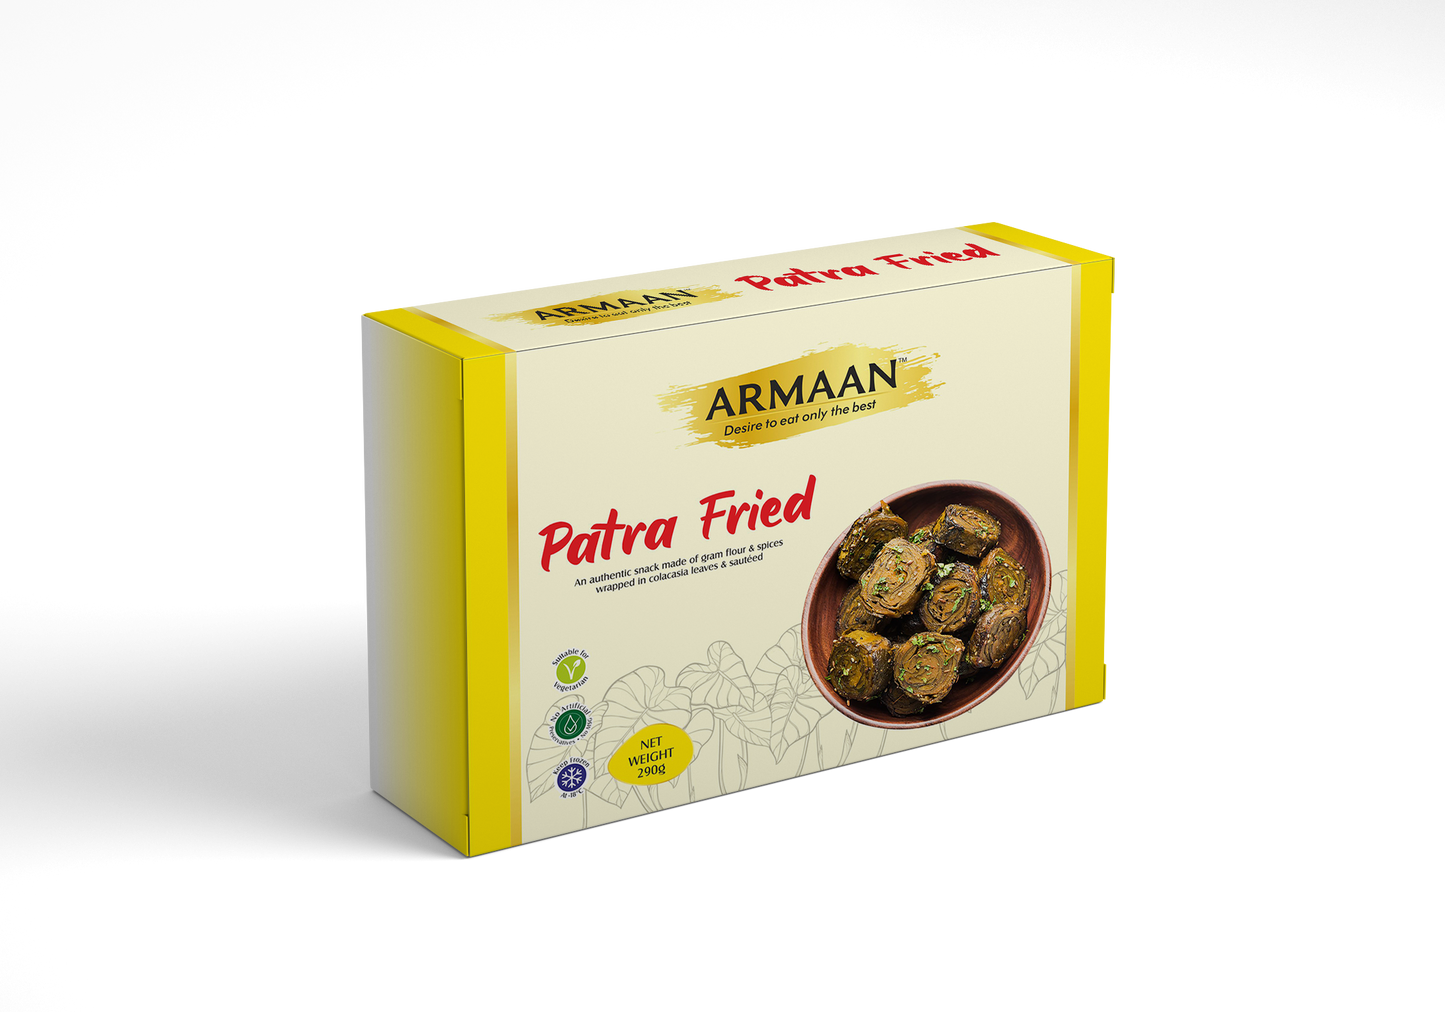 Armaan Patra Fried 290g